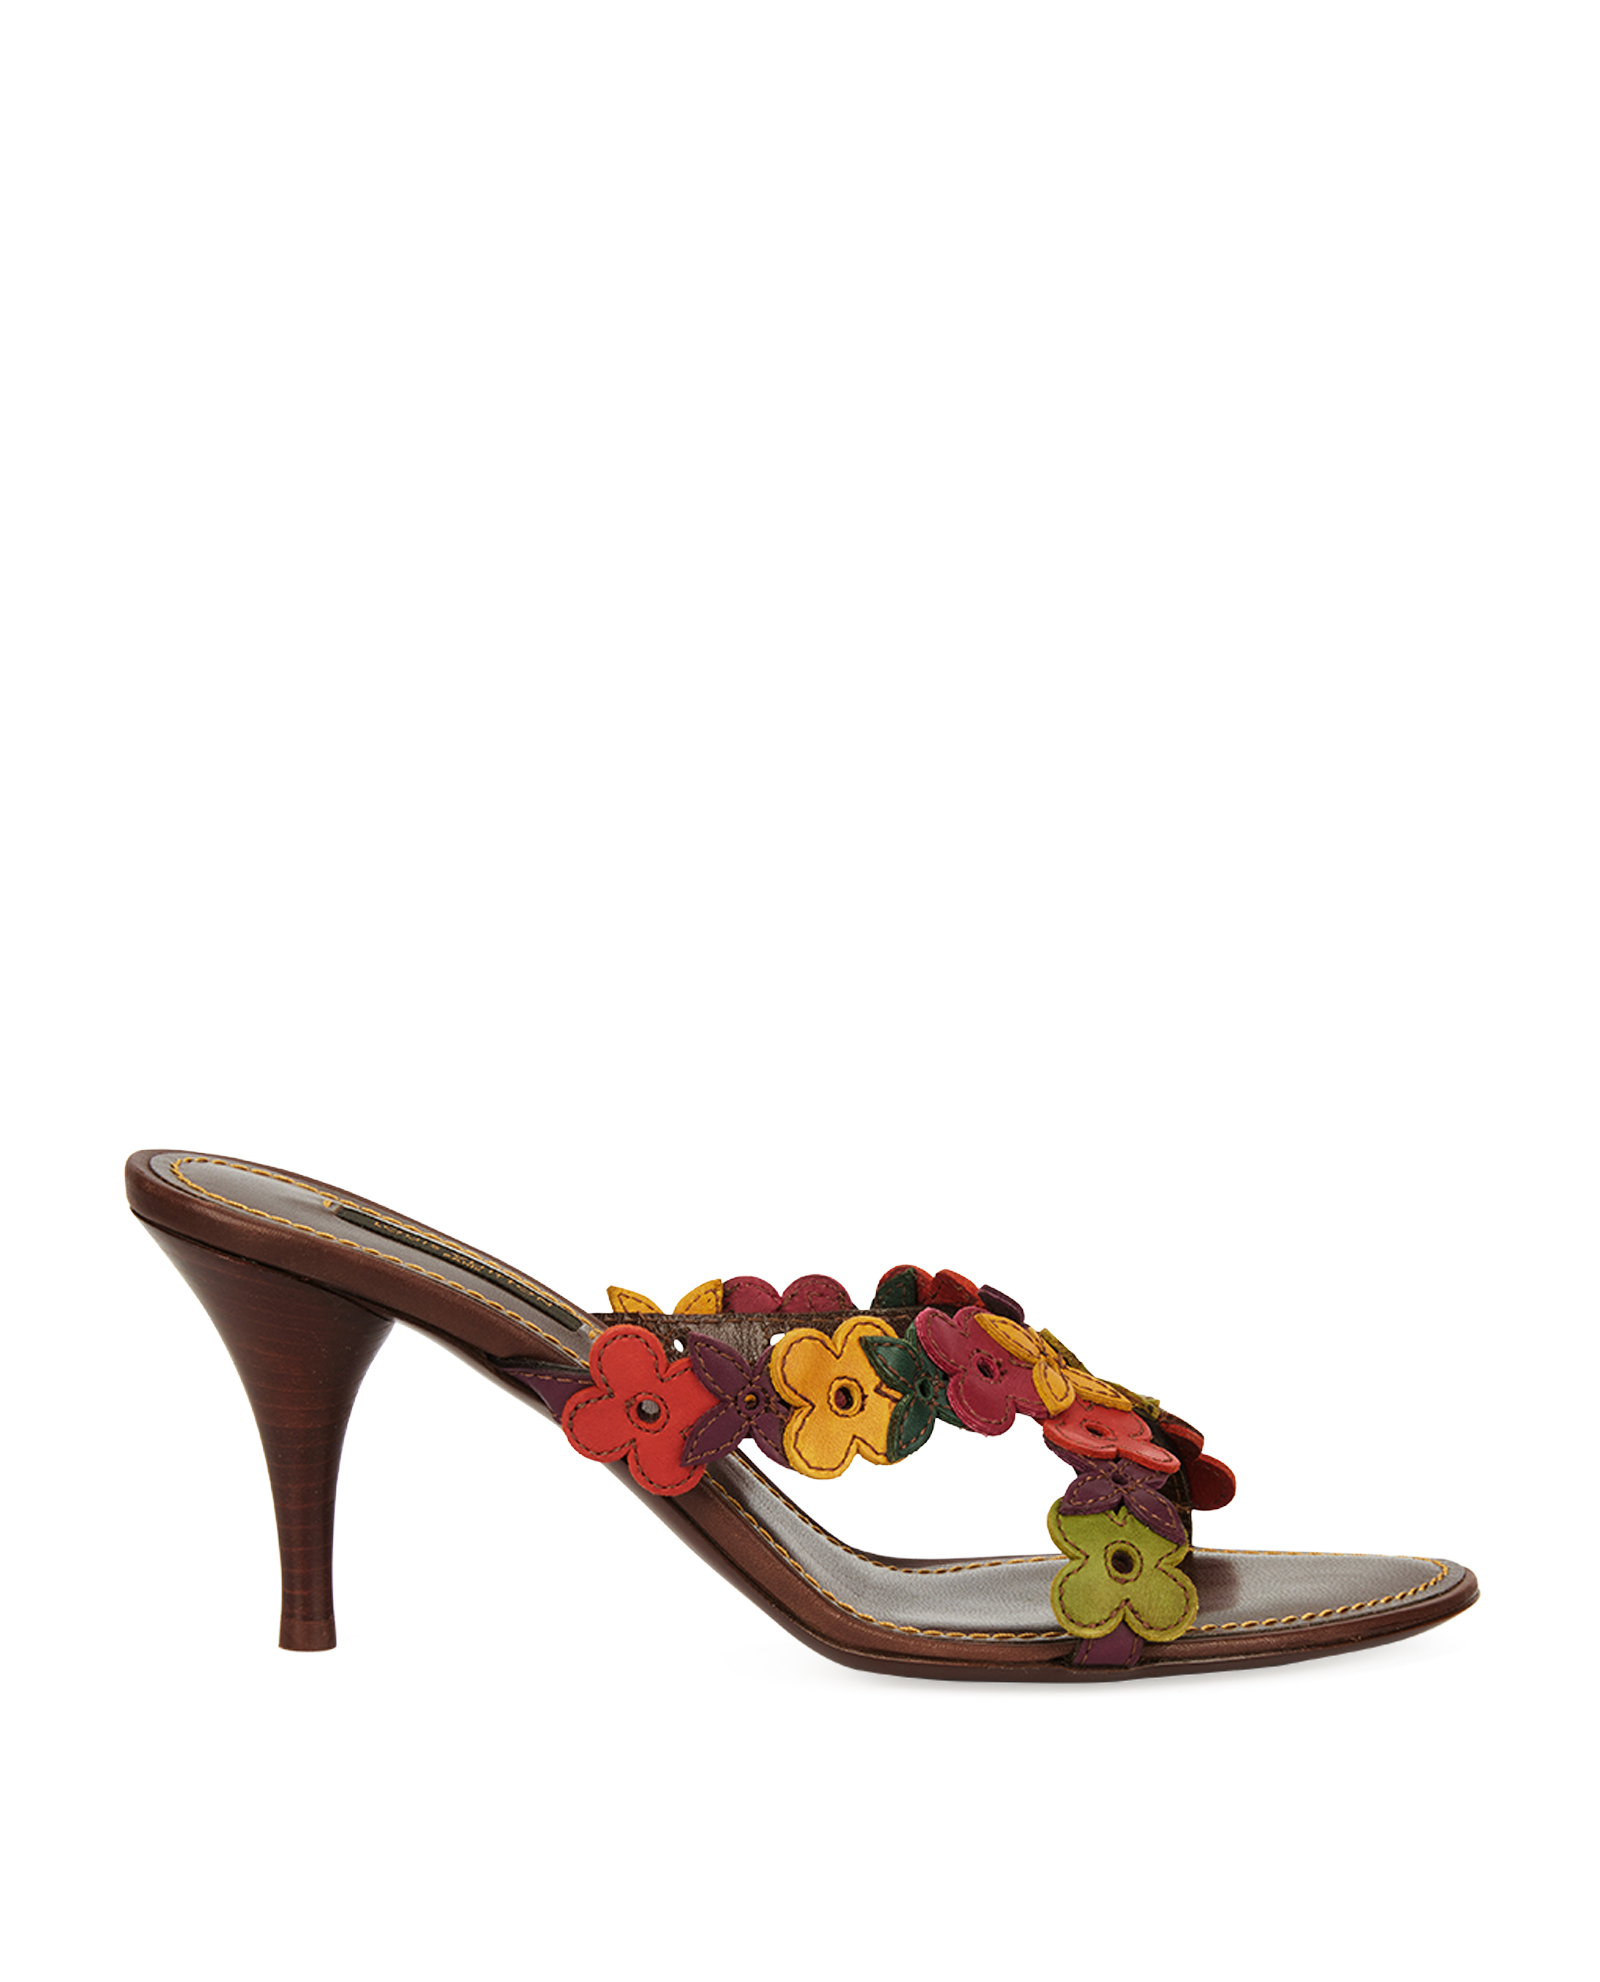 LOUIS VUITTON #39428 Brown & Golden Leather Sandal Heels (US 7.5 EU 37.5) –  ALL YOUR BLISS